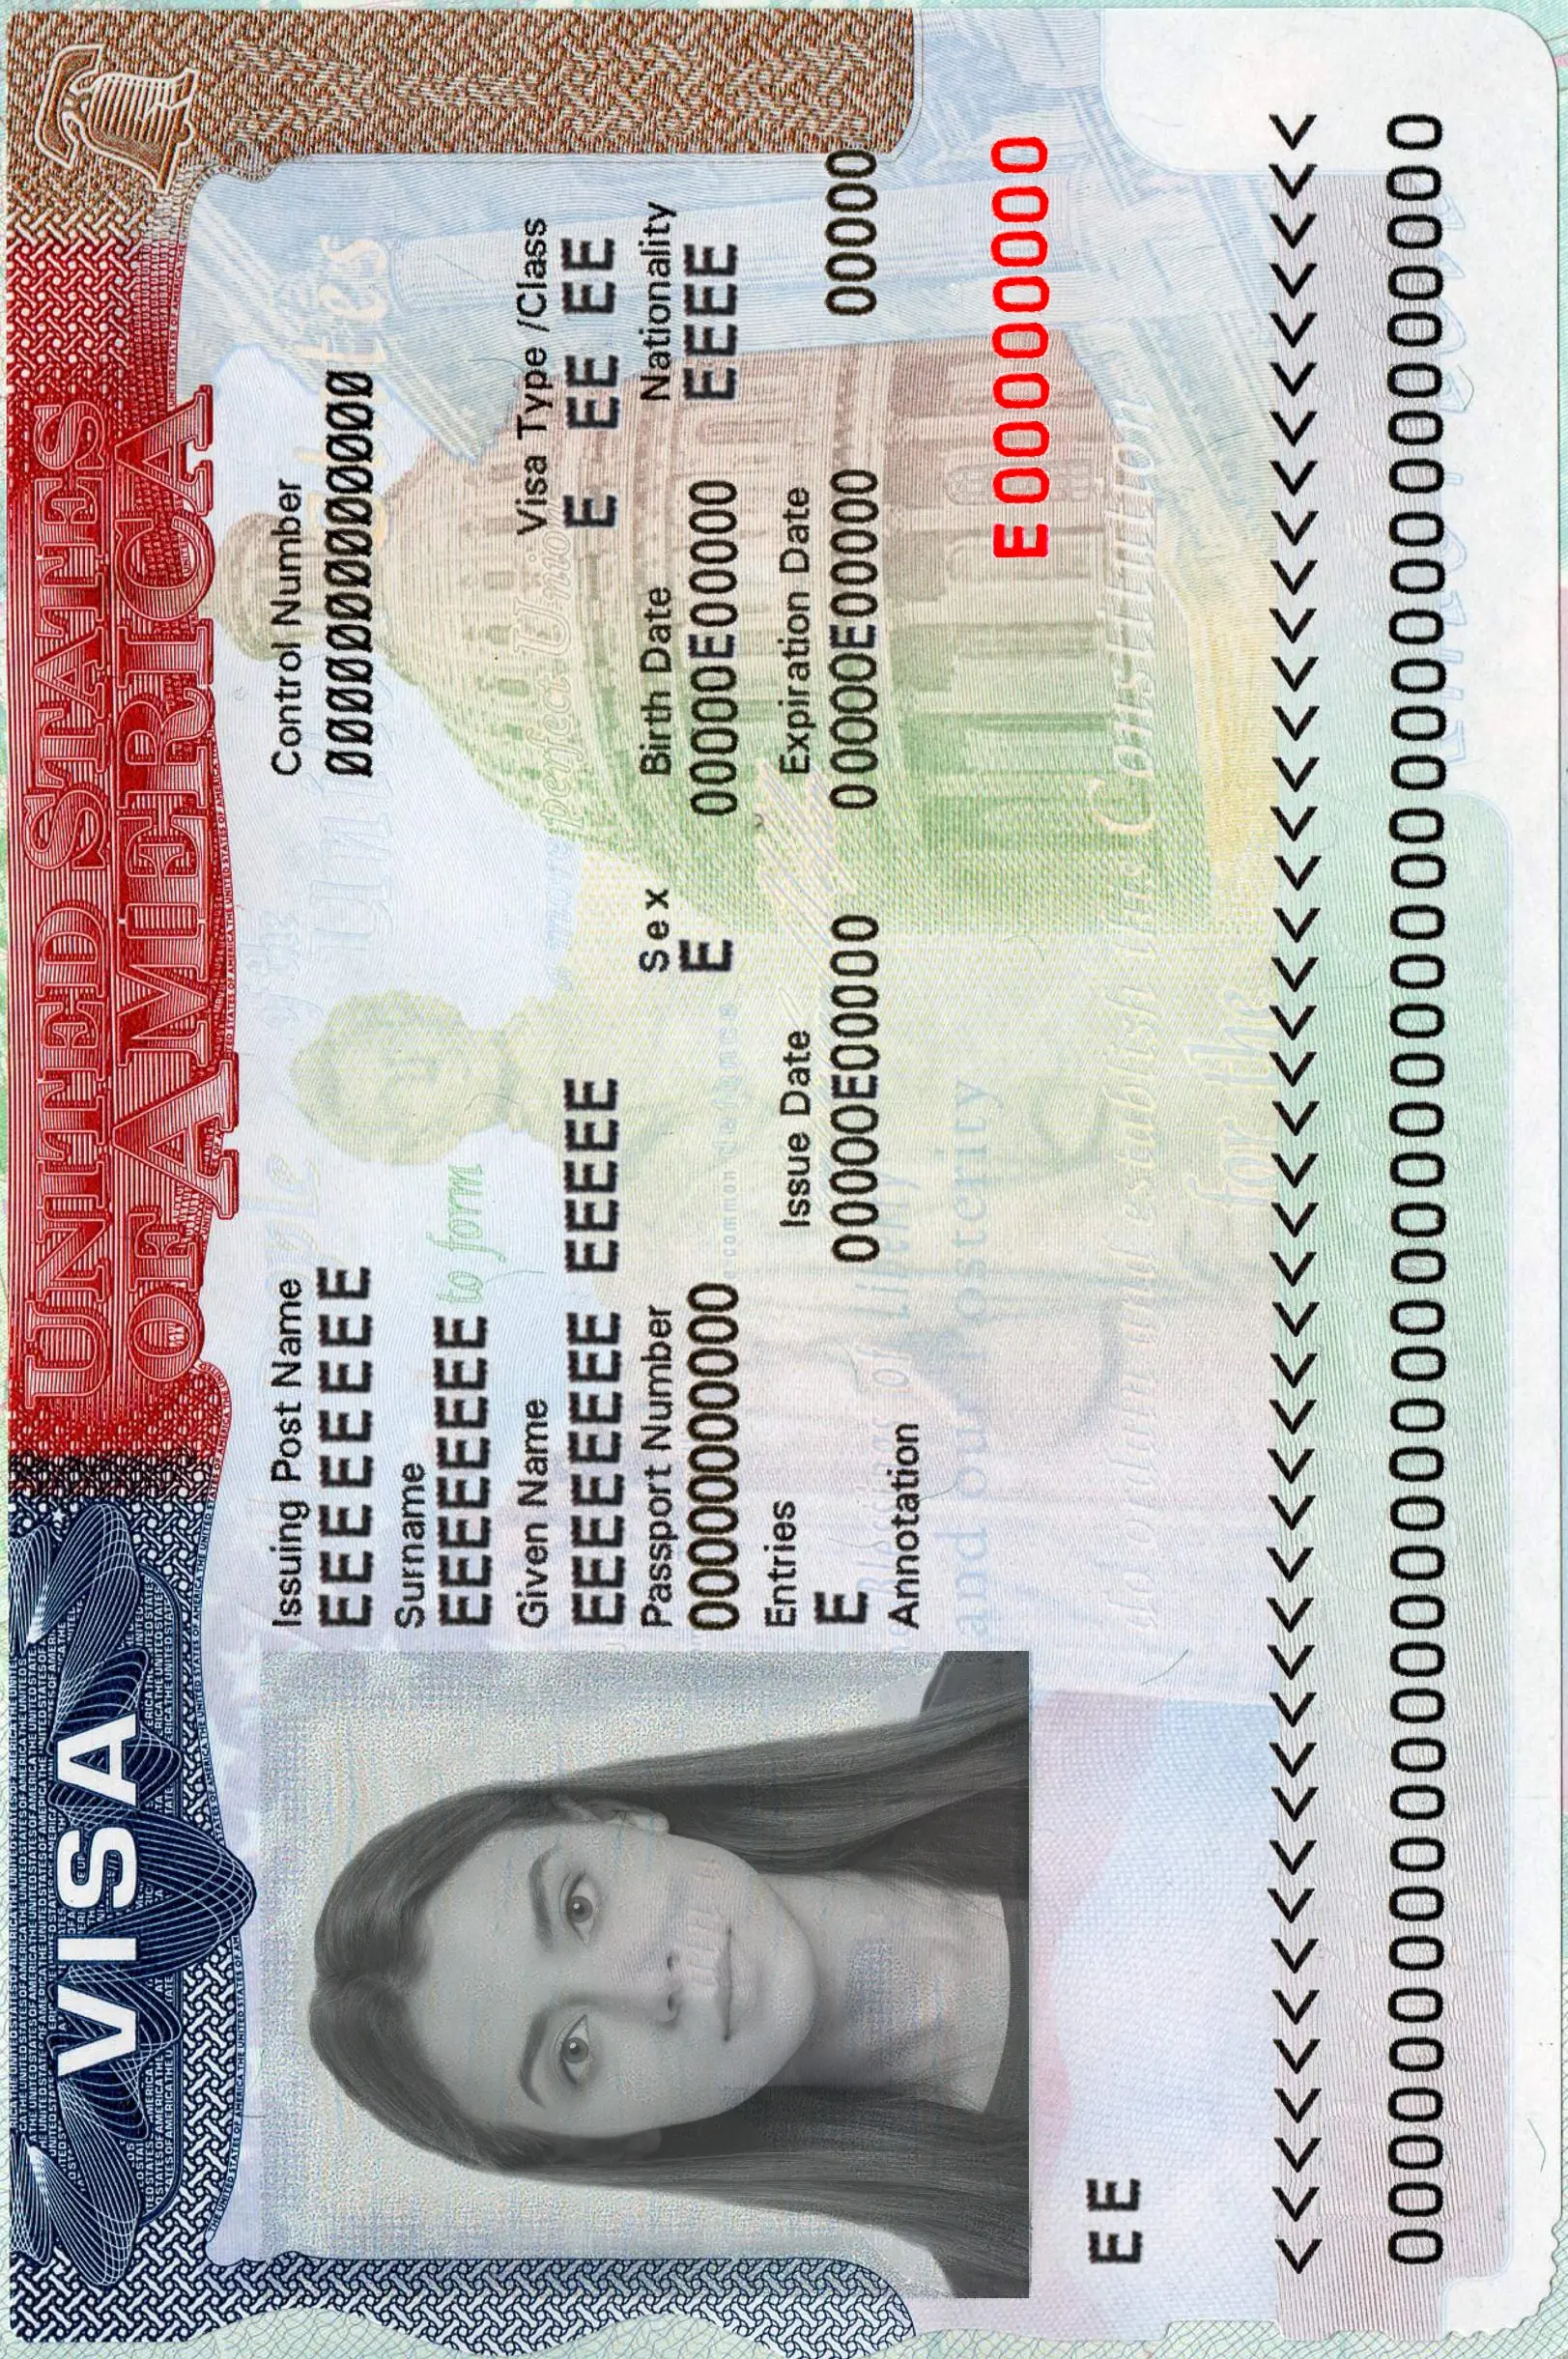 Svenskt USA-visumbild